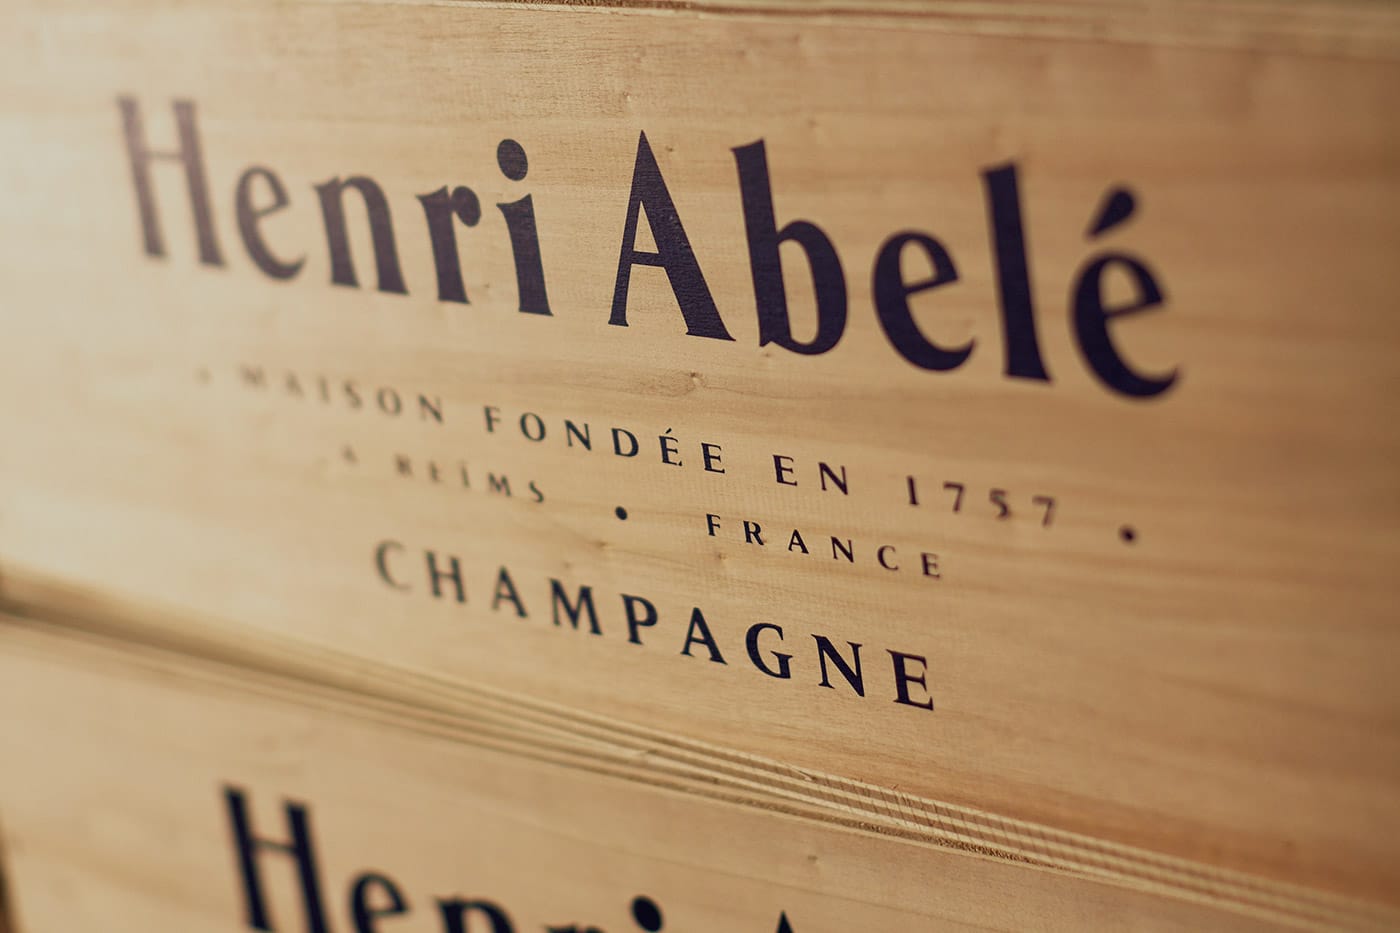 Wijnkist Henri Abele Champagne